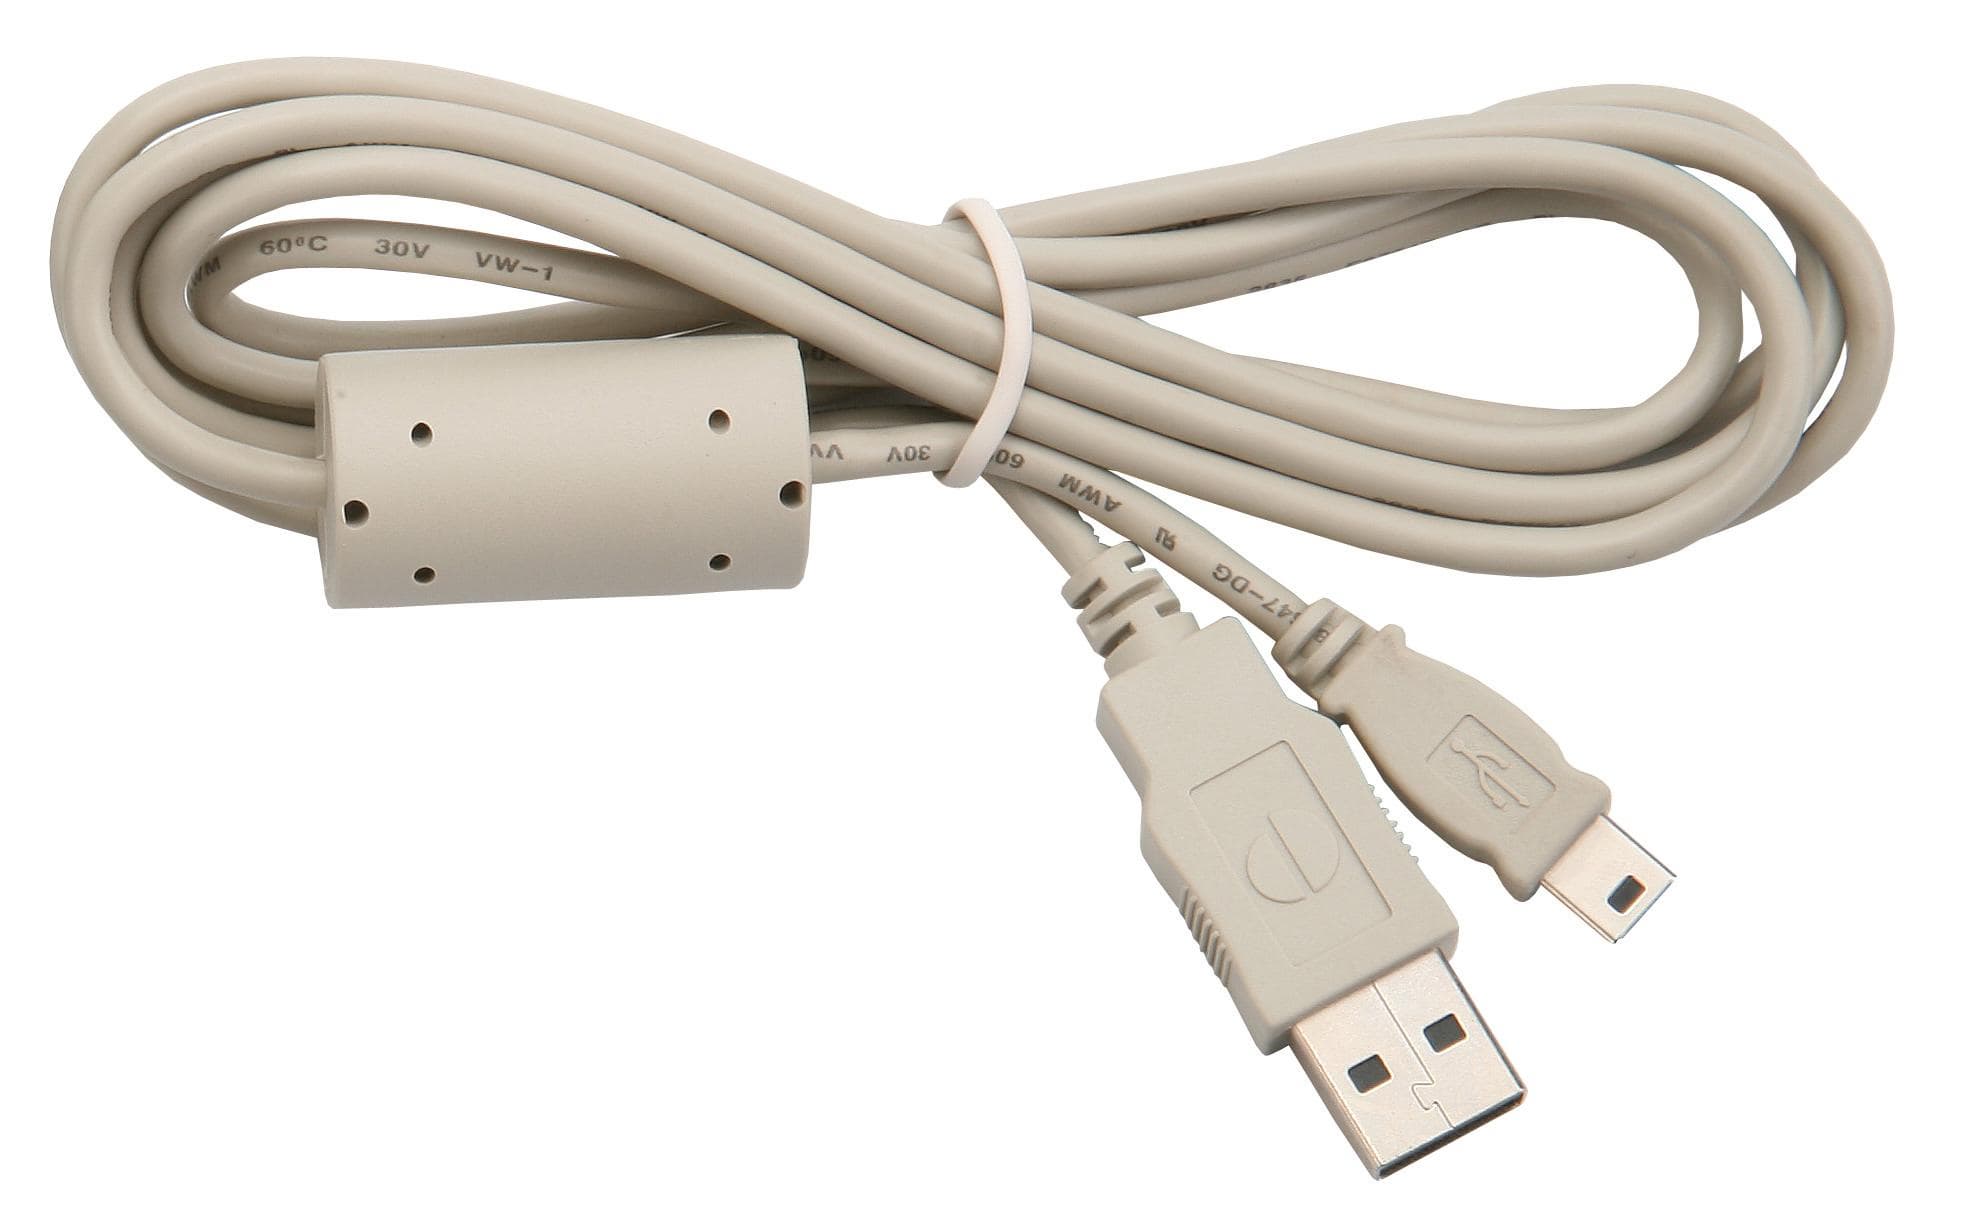 USB AM to mini USB cable